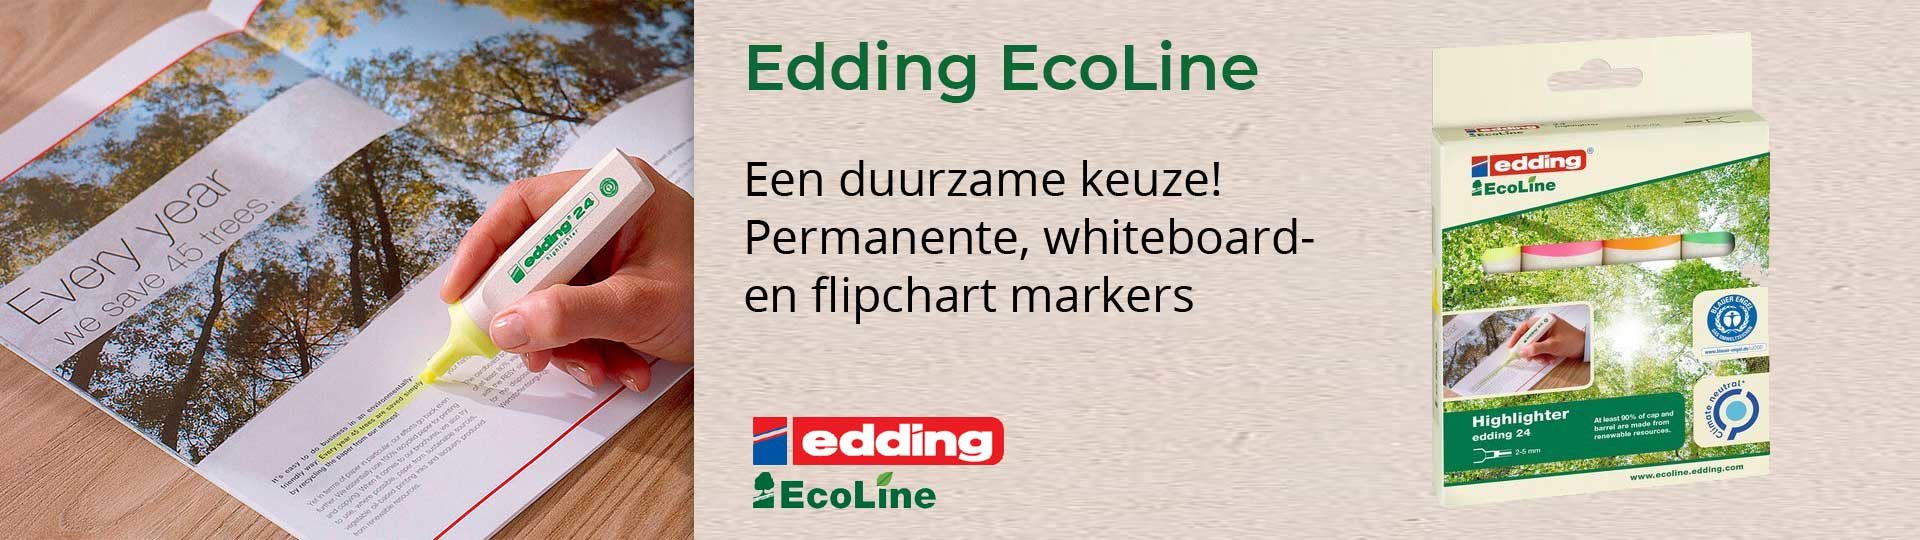 Edding-Ecoline duurzame schrijfwaren | oxeurope.nl